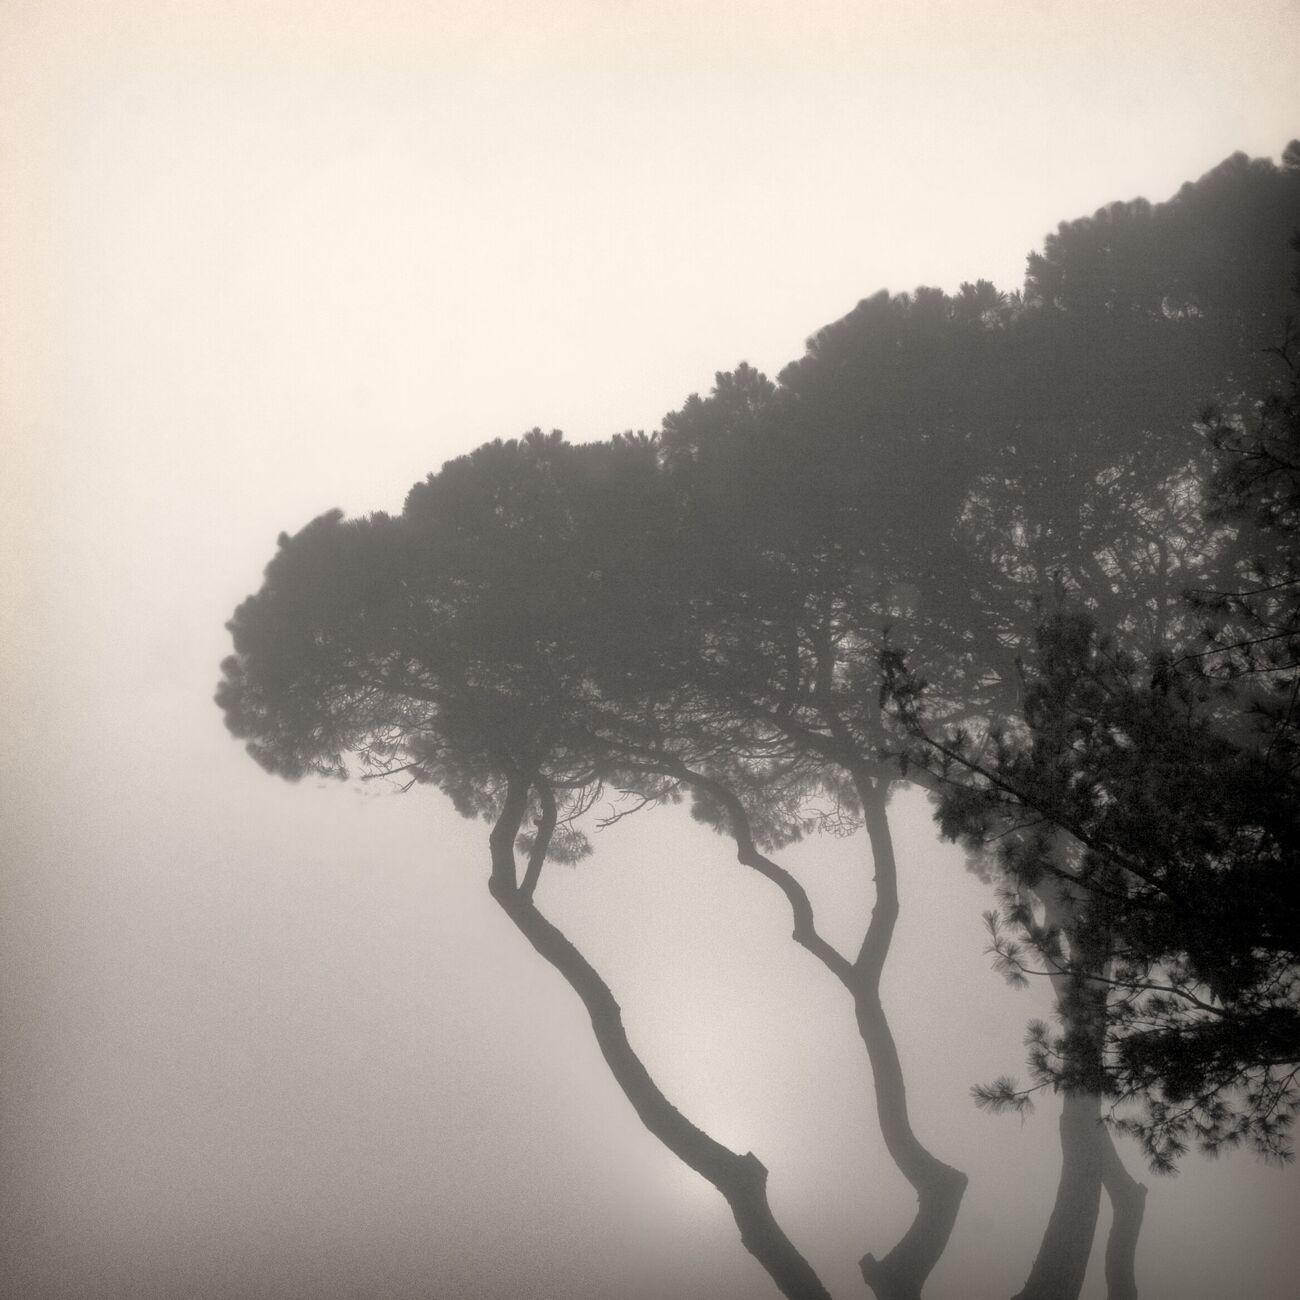 Acheter une photographie 23 x 23 cm, Pines in fog. Ref-598-3 - Denis Olivier Photographie d'Art